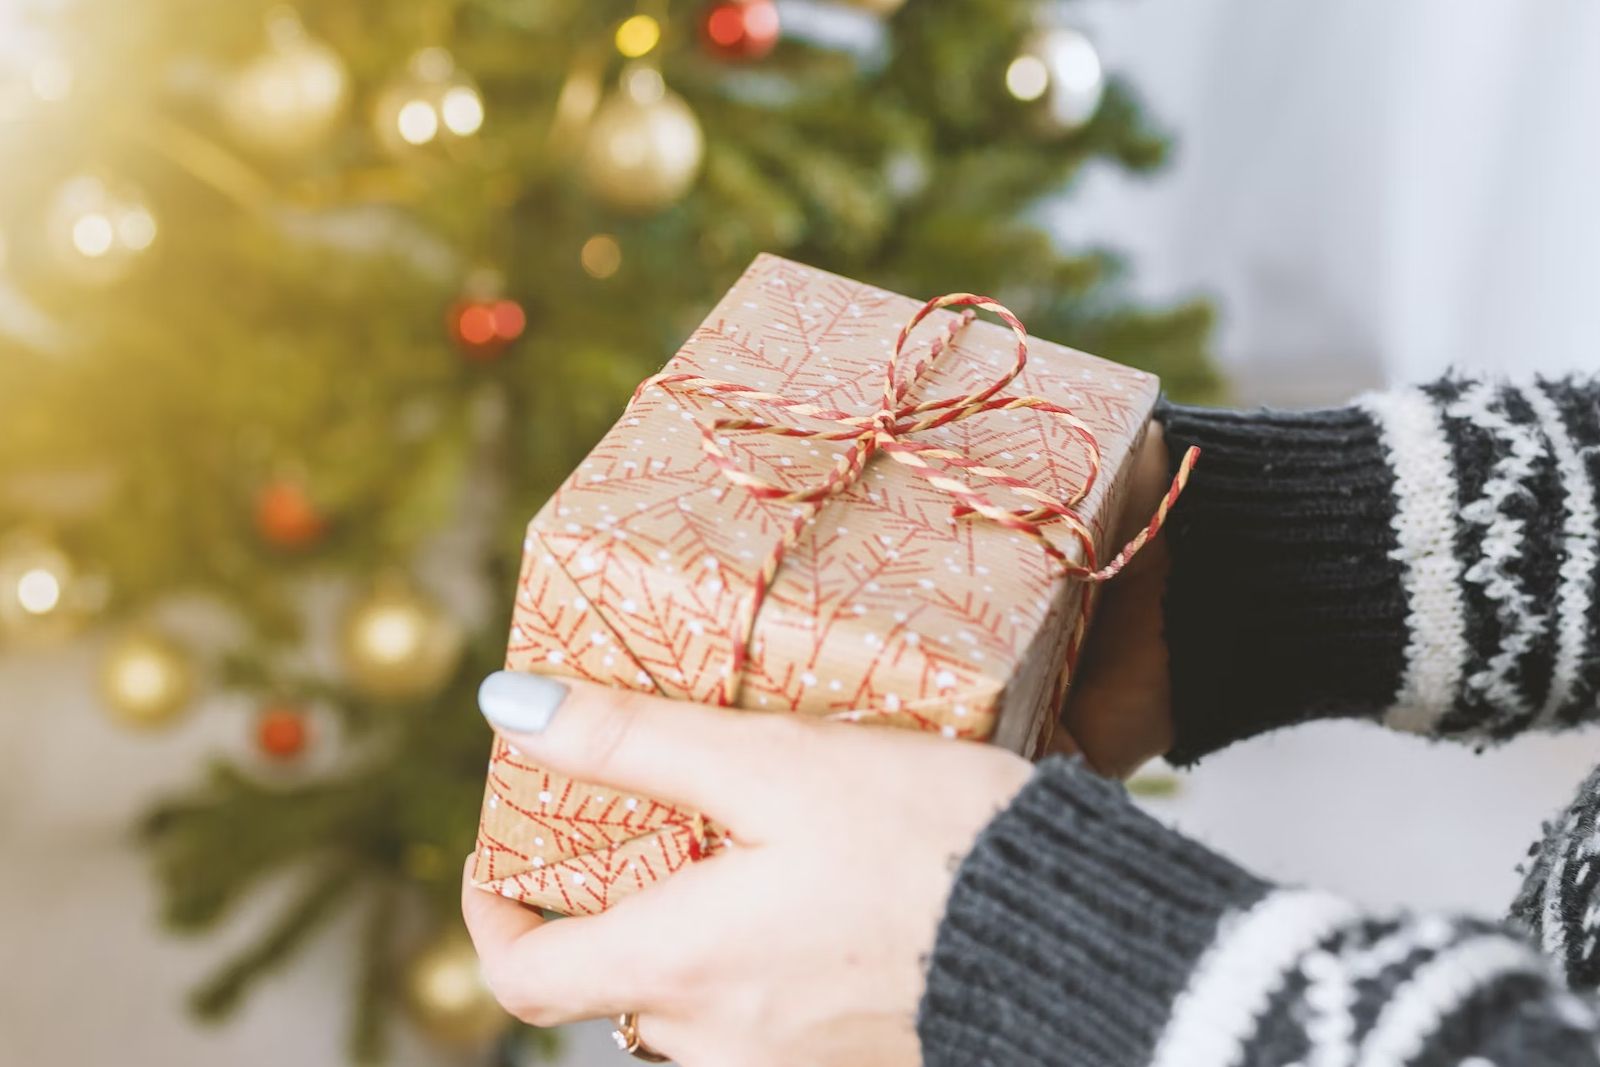 Every major retailer's return policy this holiday season 20232024